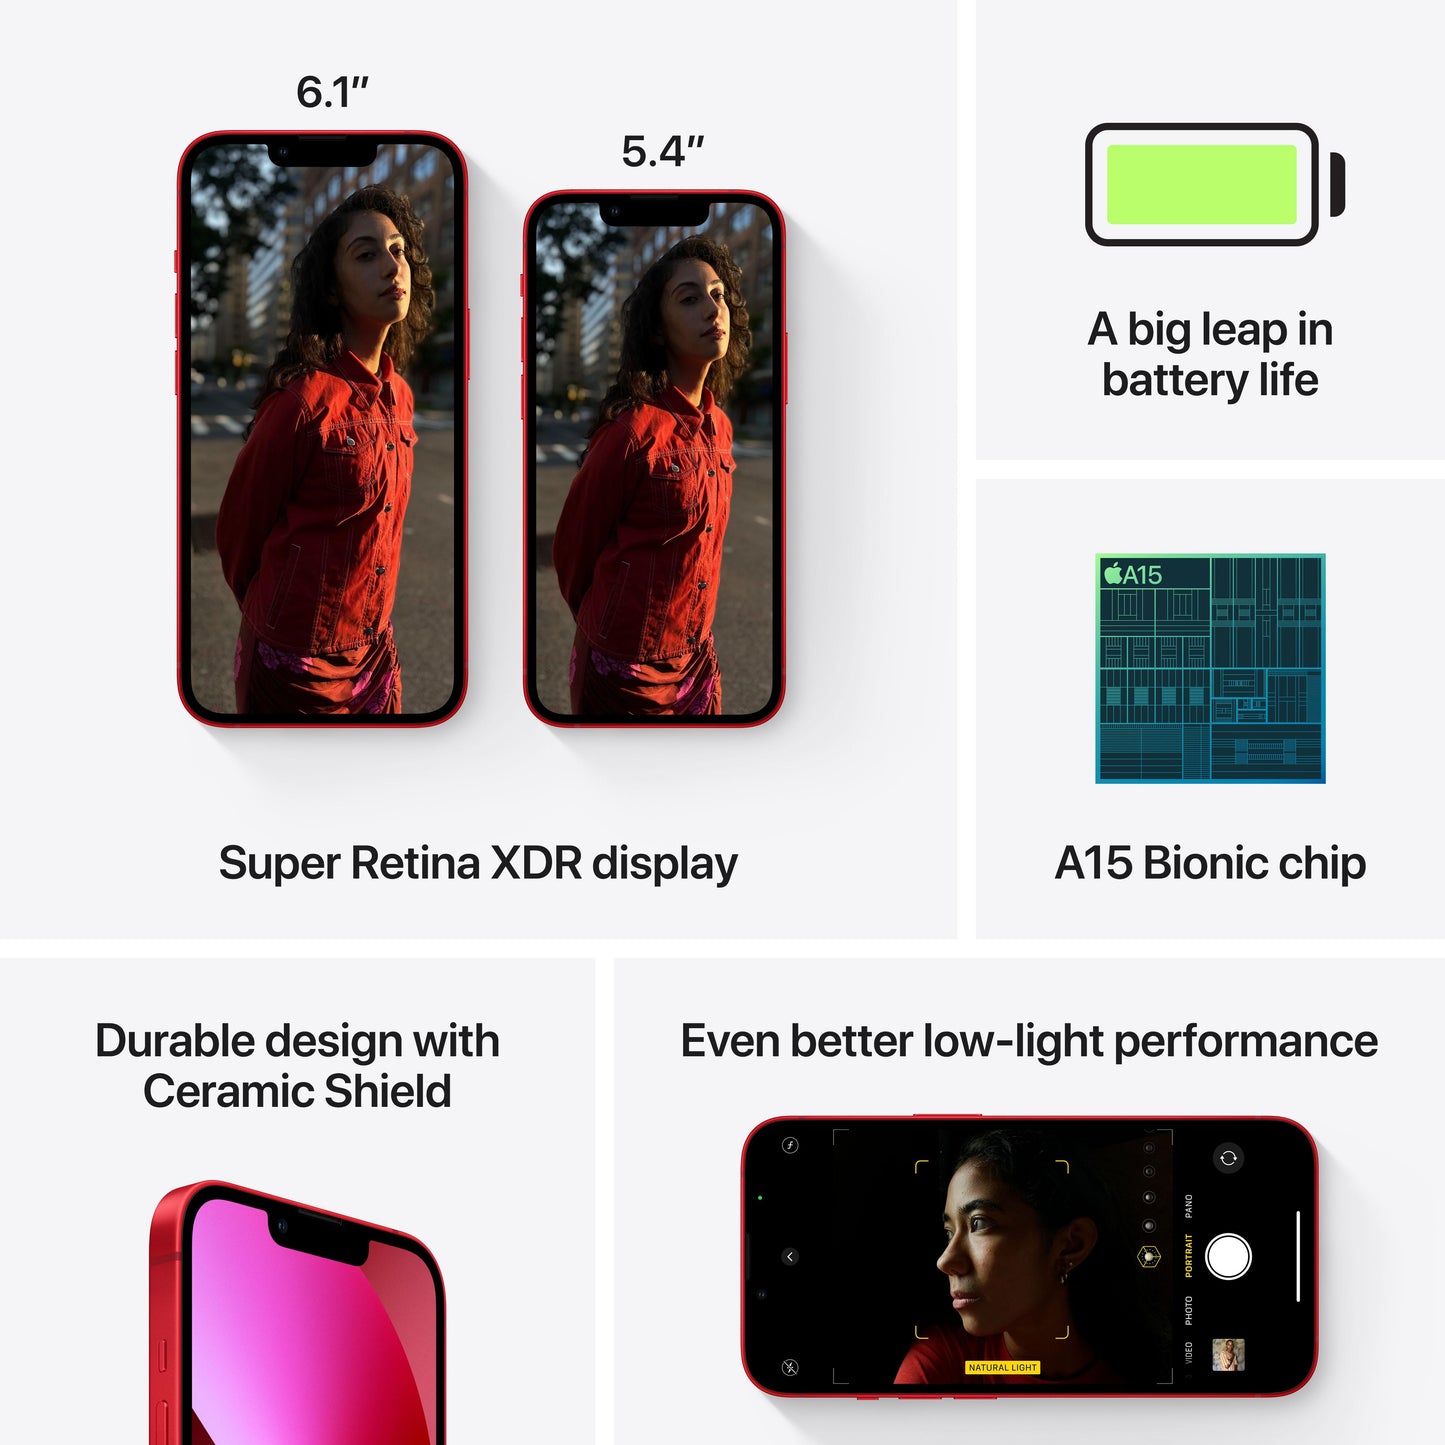 iPhone 13 mini 128GB (PRODUCT)RED